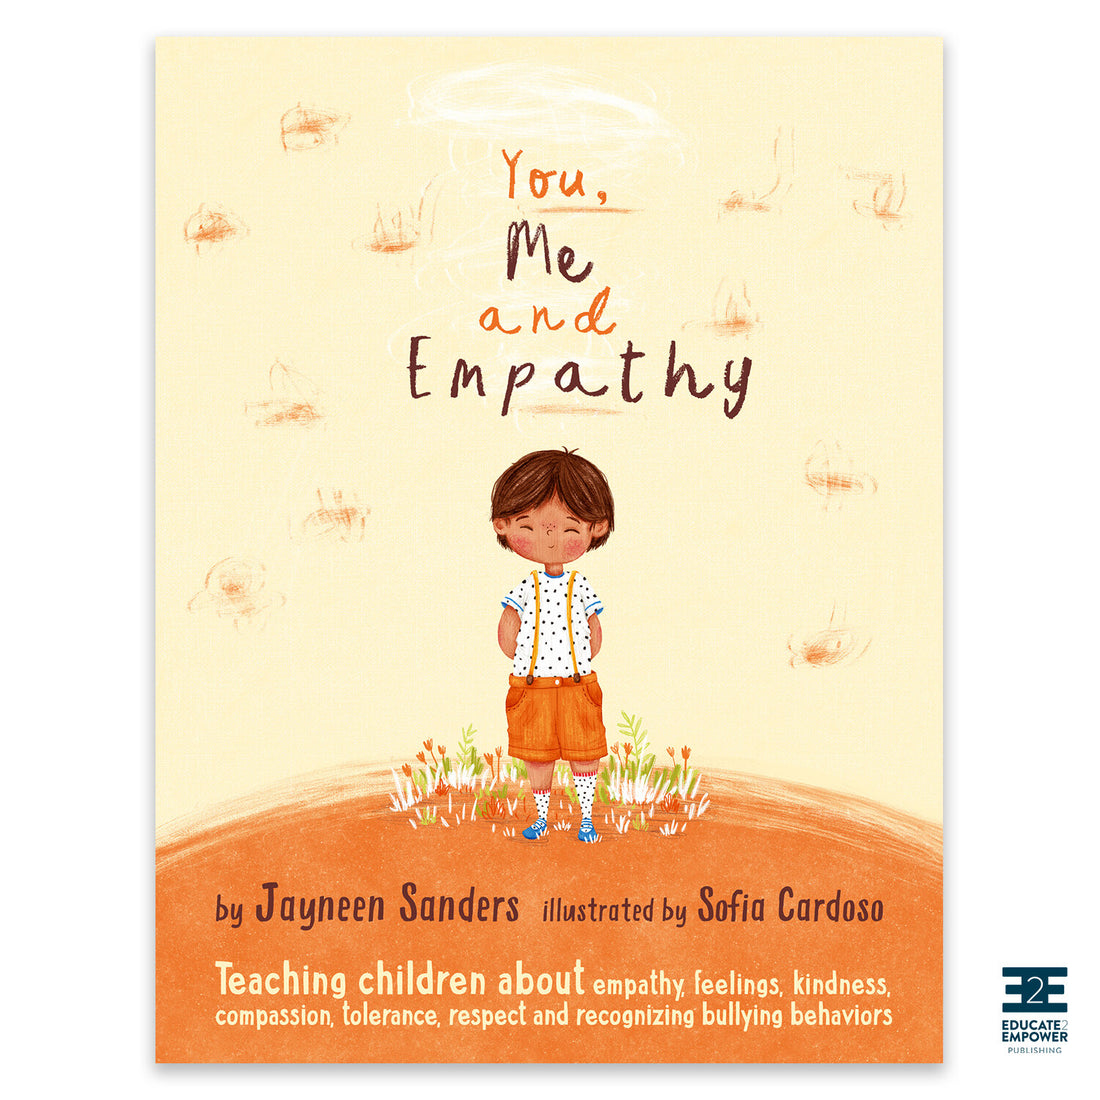 Book donation towards 16yo Girl Scout's Empathy program.